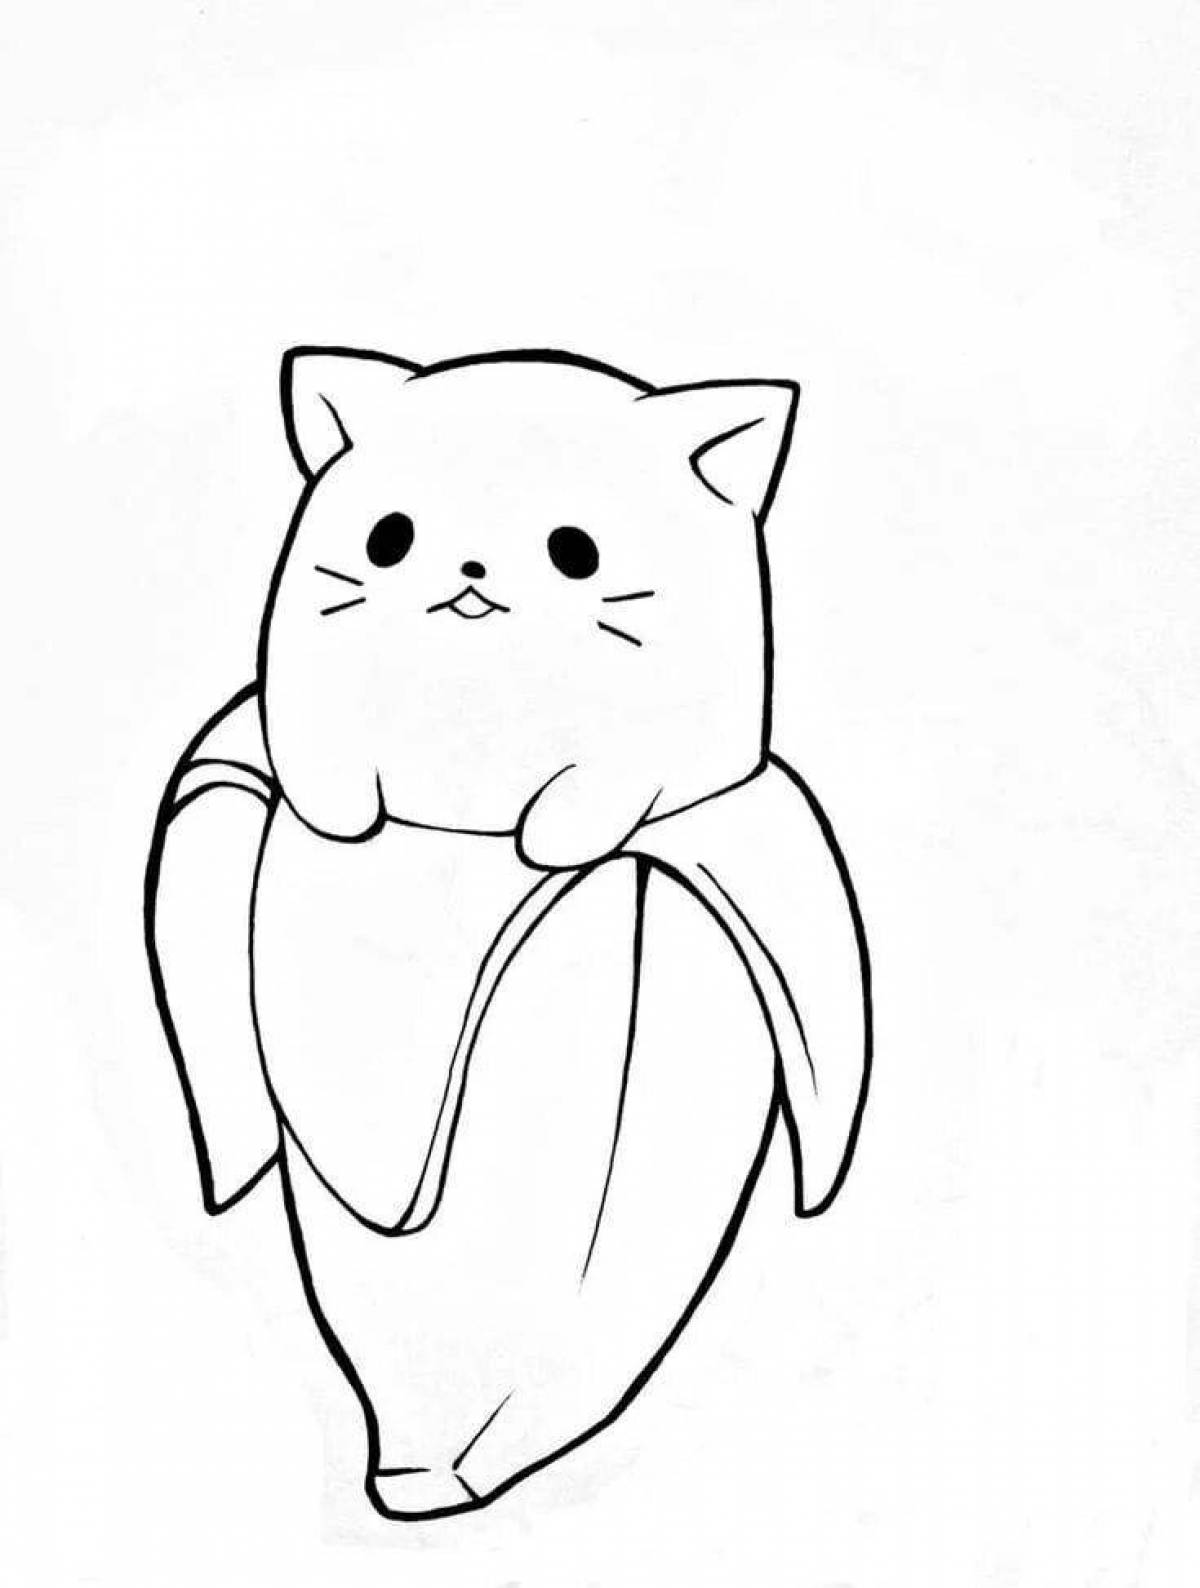 Adorable kawaii cats coloring book